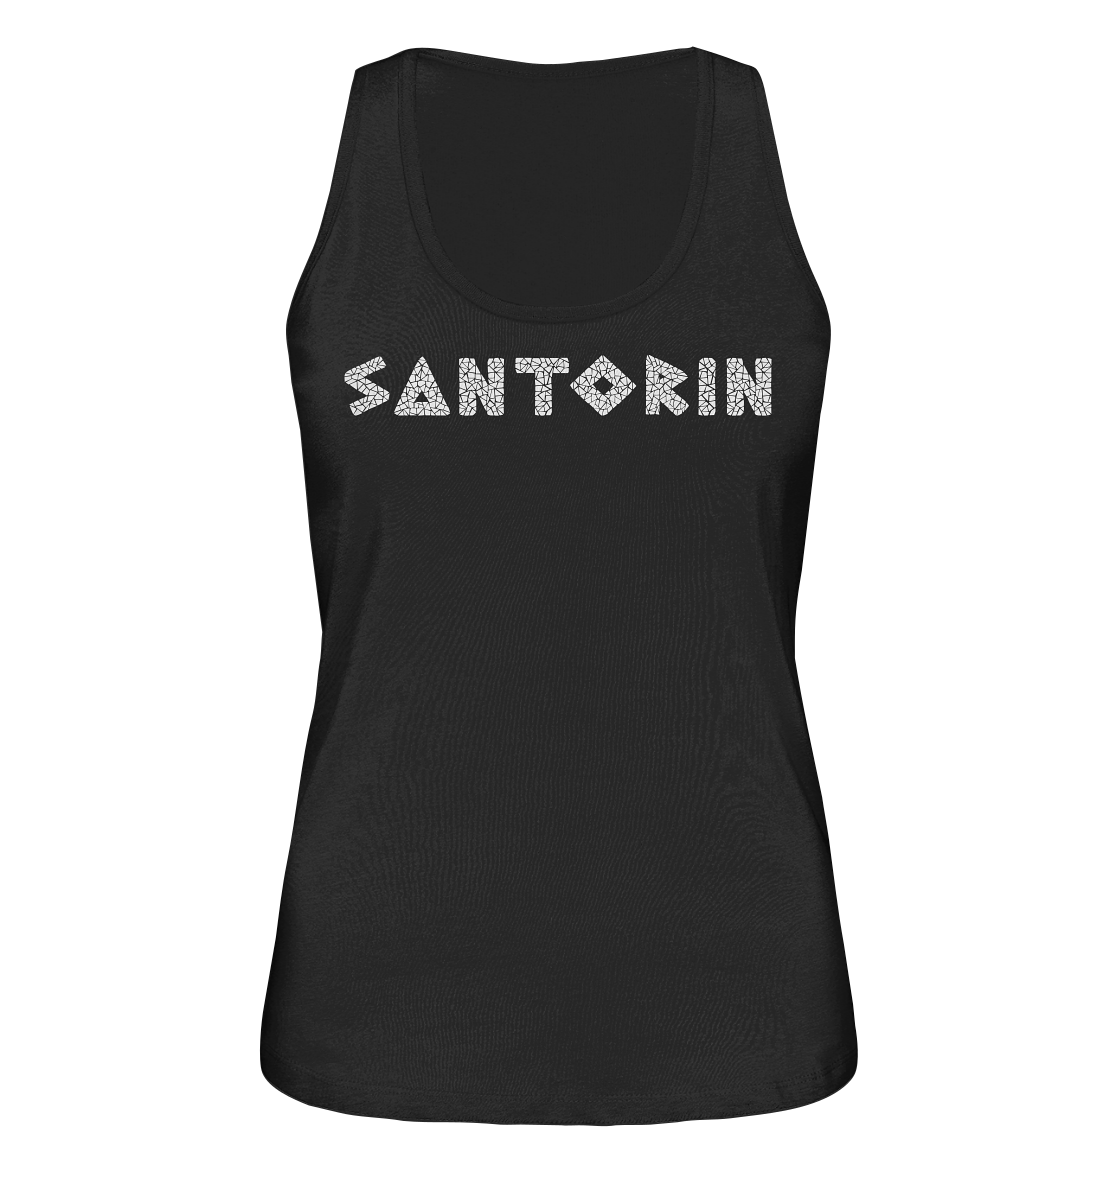 Santorini Mosaic - Ladies Organic Tank Top